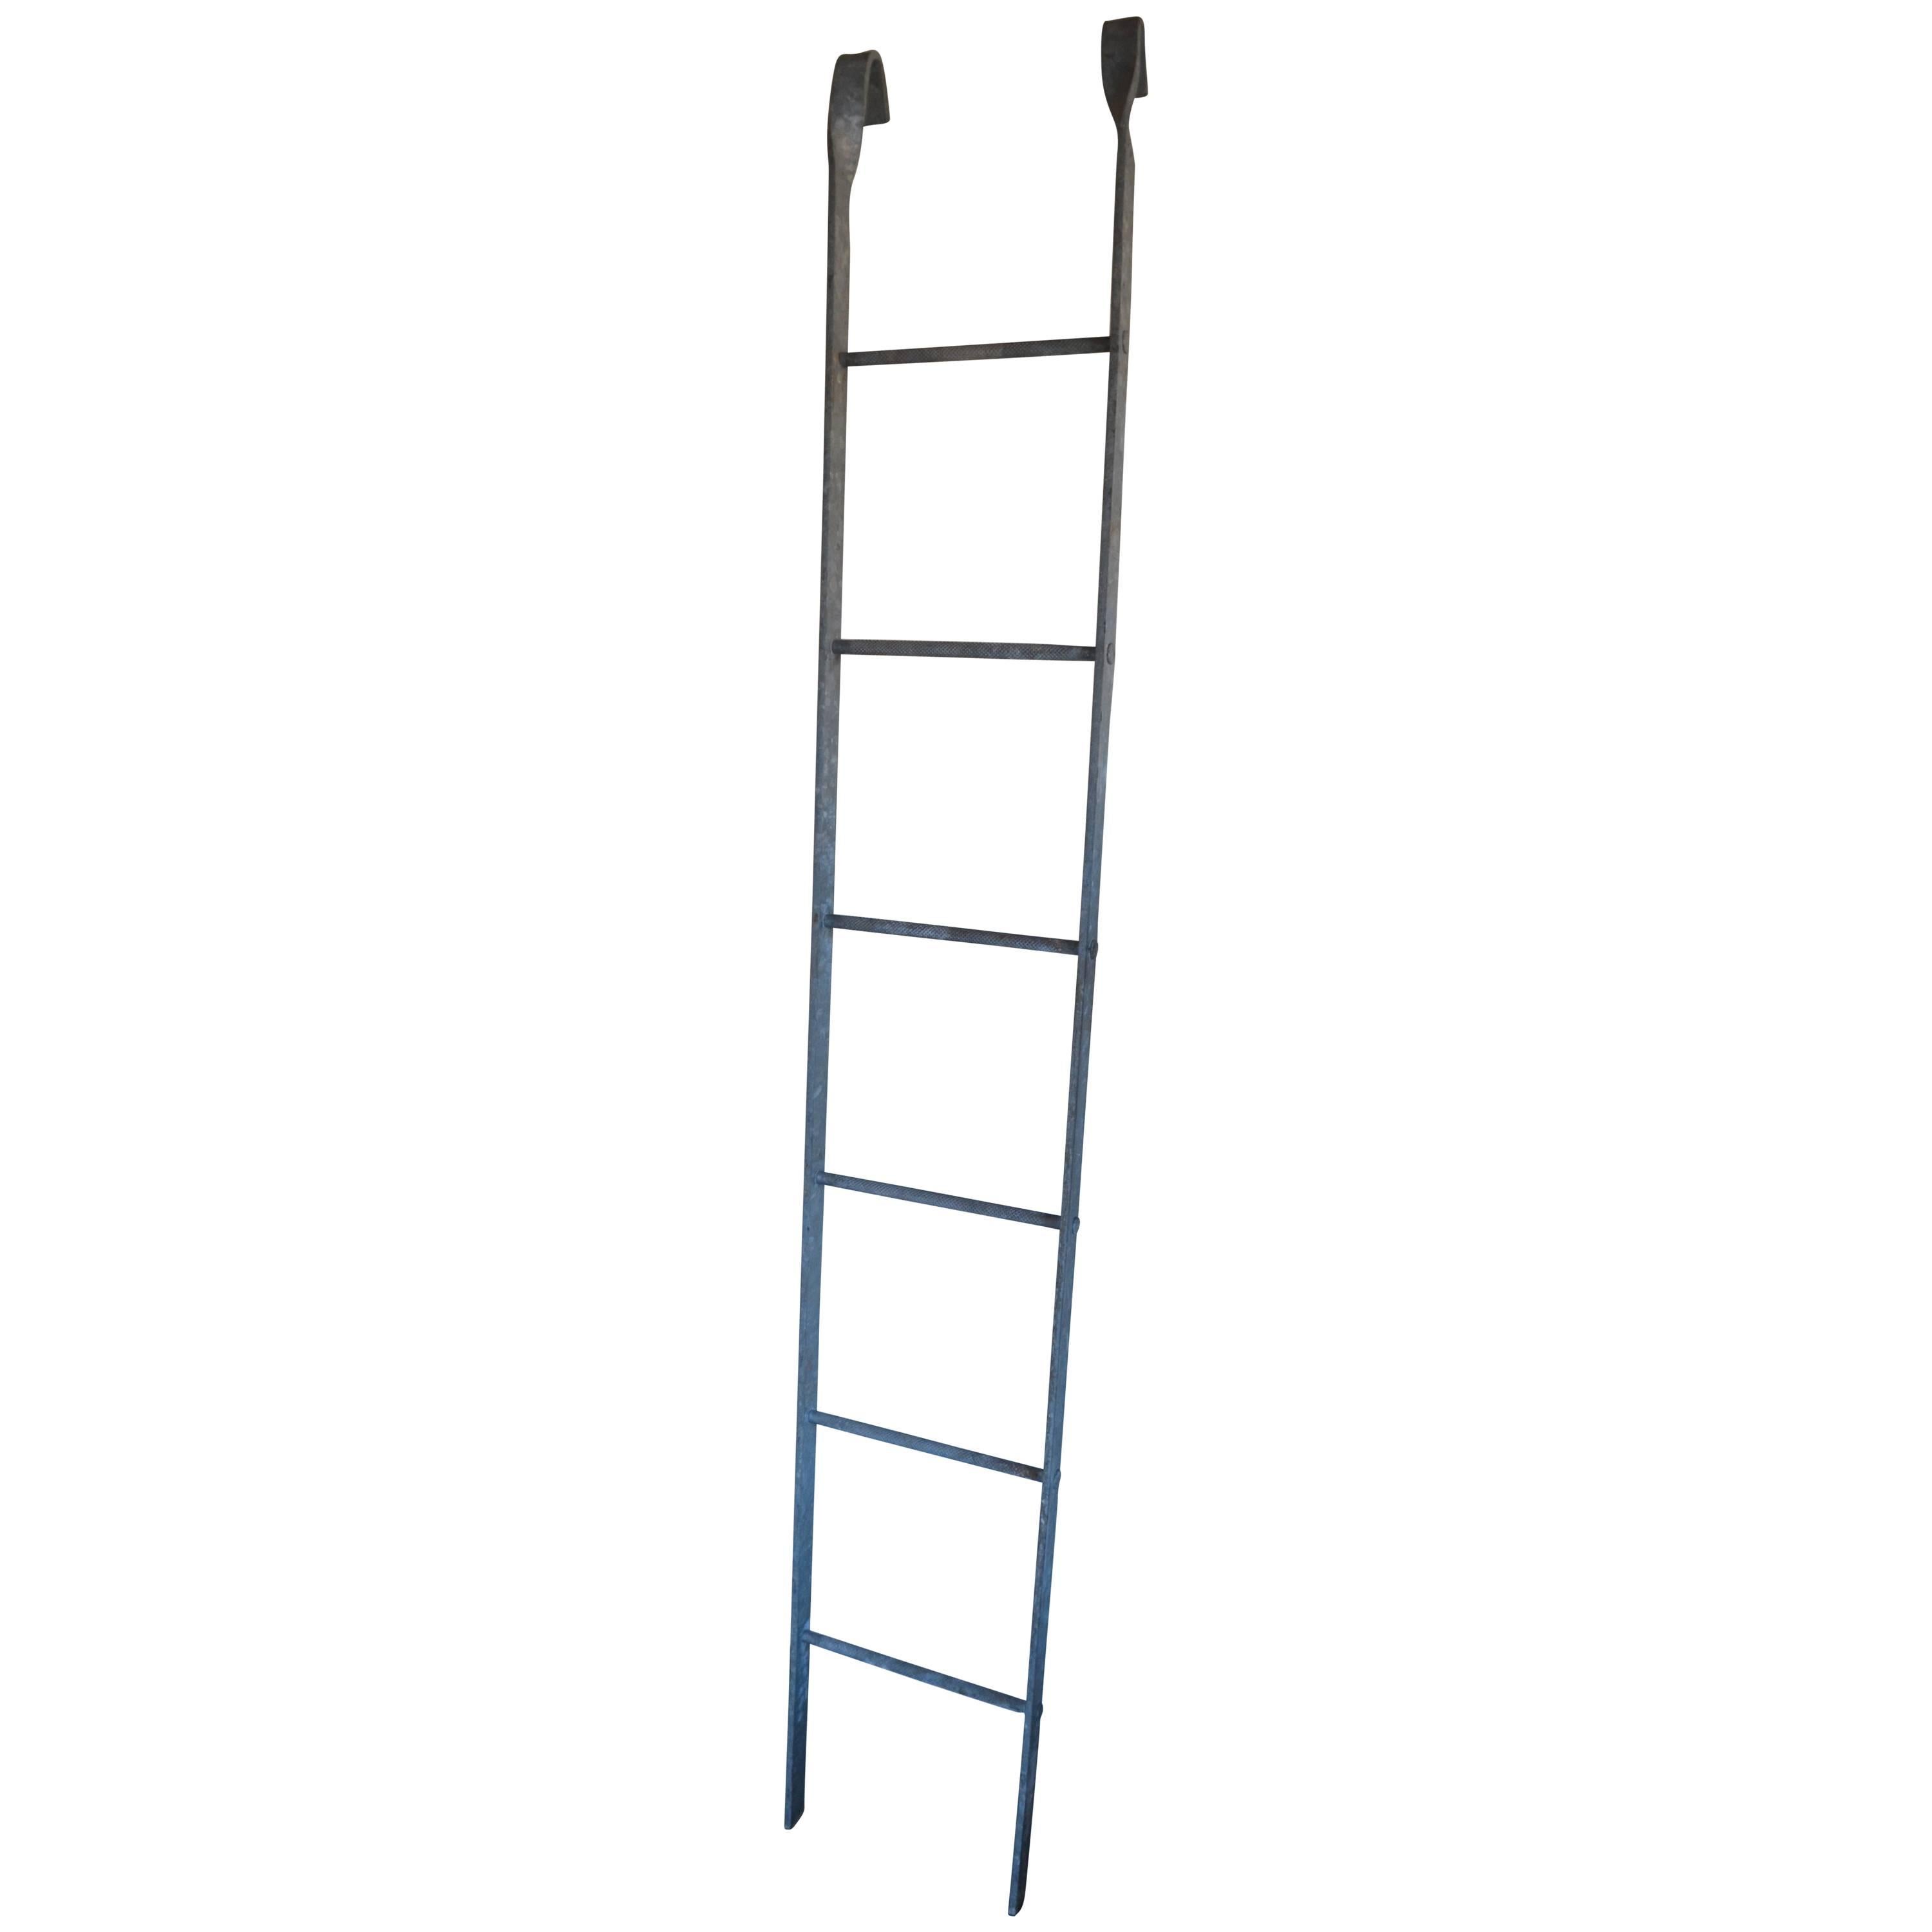 Vintage Galvanized Steel Ladder as Plant Trellis or Sculptural Wall Art